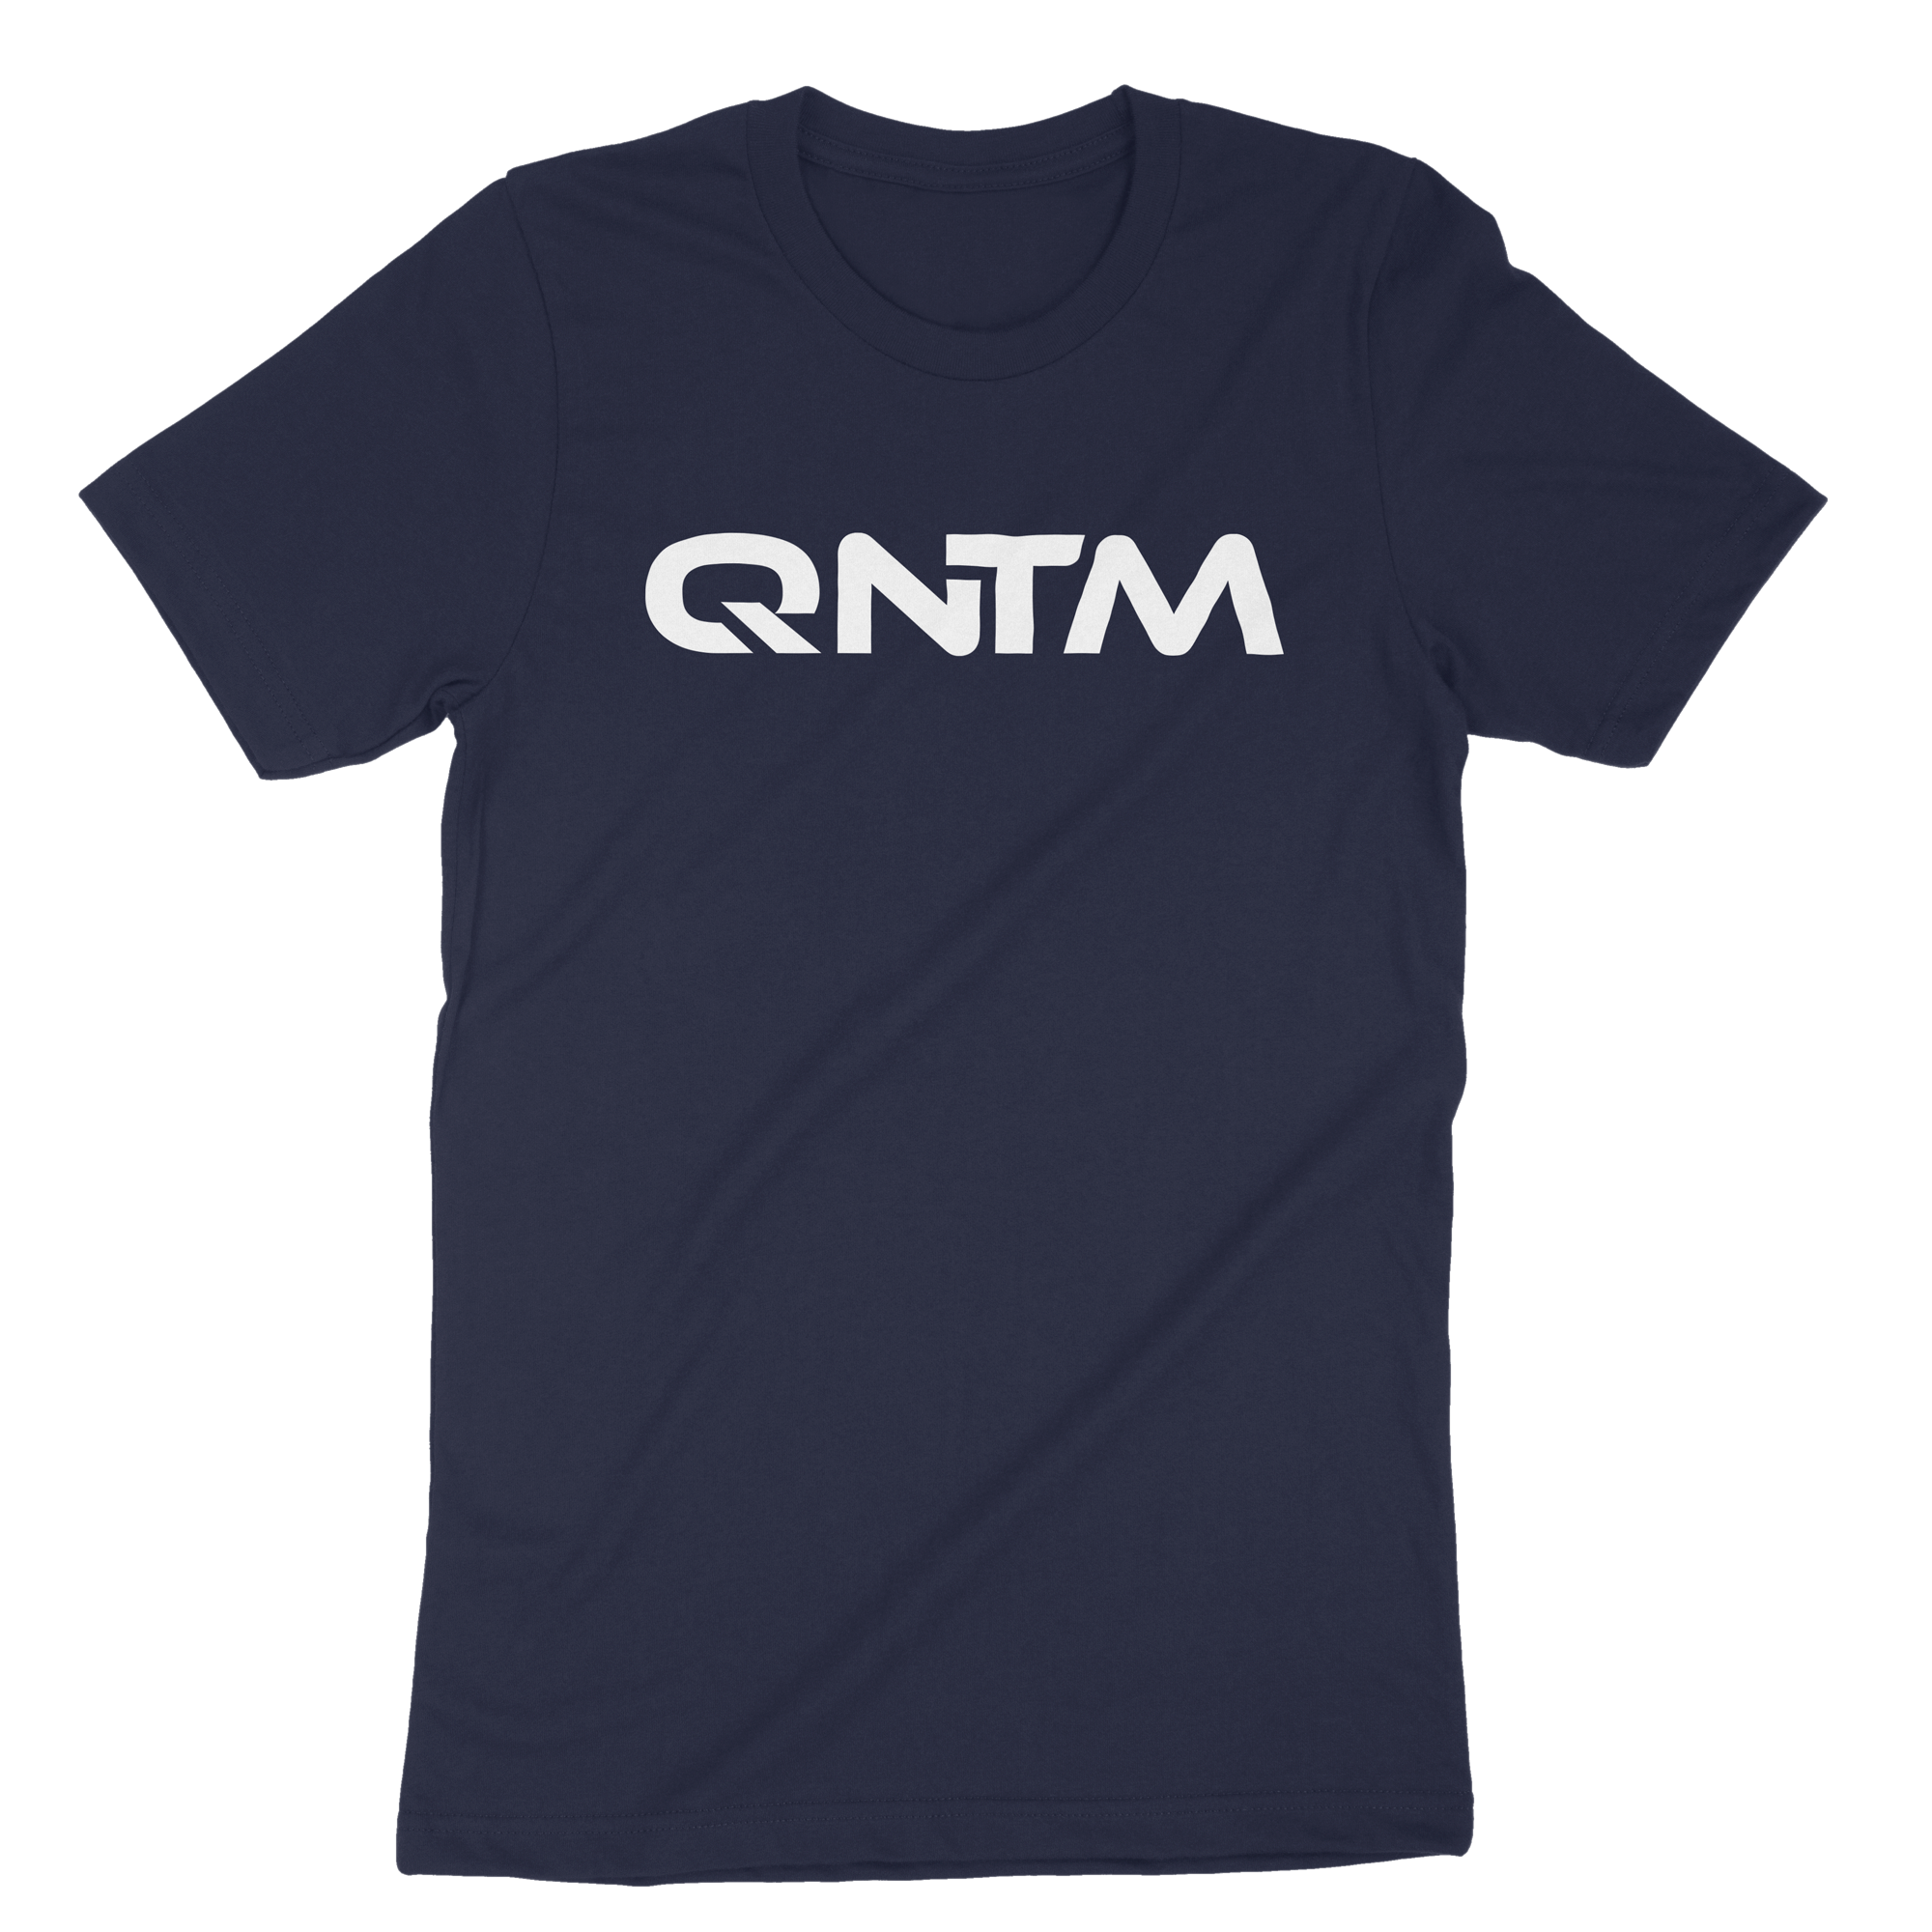 QNTM Logo T-Shirt